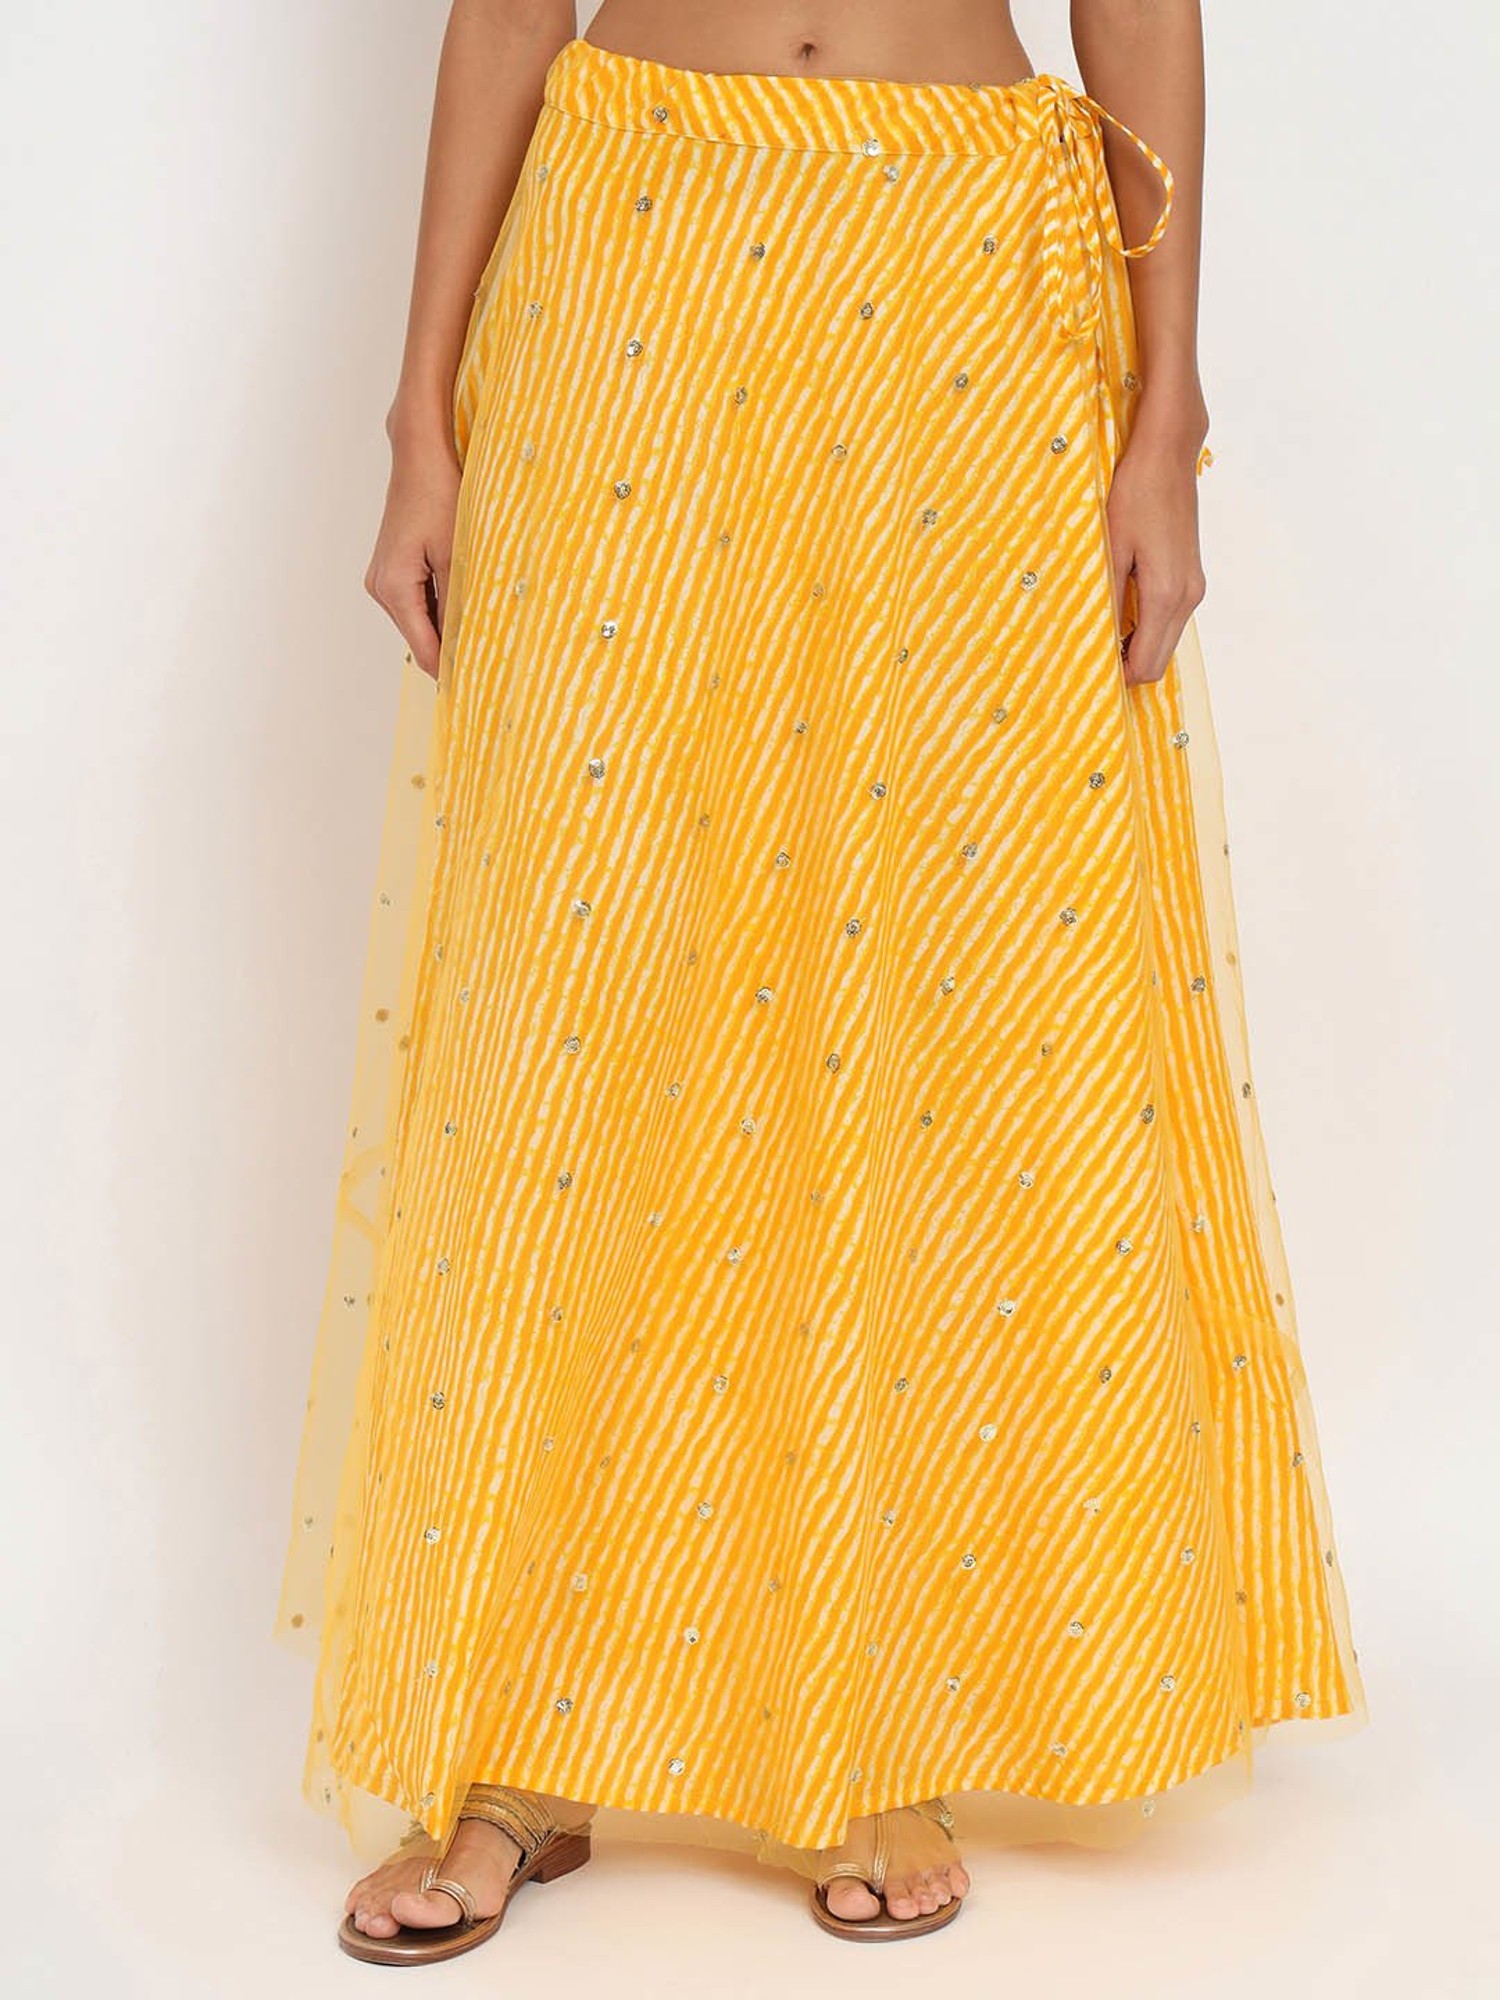 Ethnic Jaipuri Yellow Red Cotton Lehanga Skirt - LITTLE INDIA - 317661